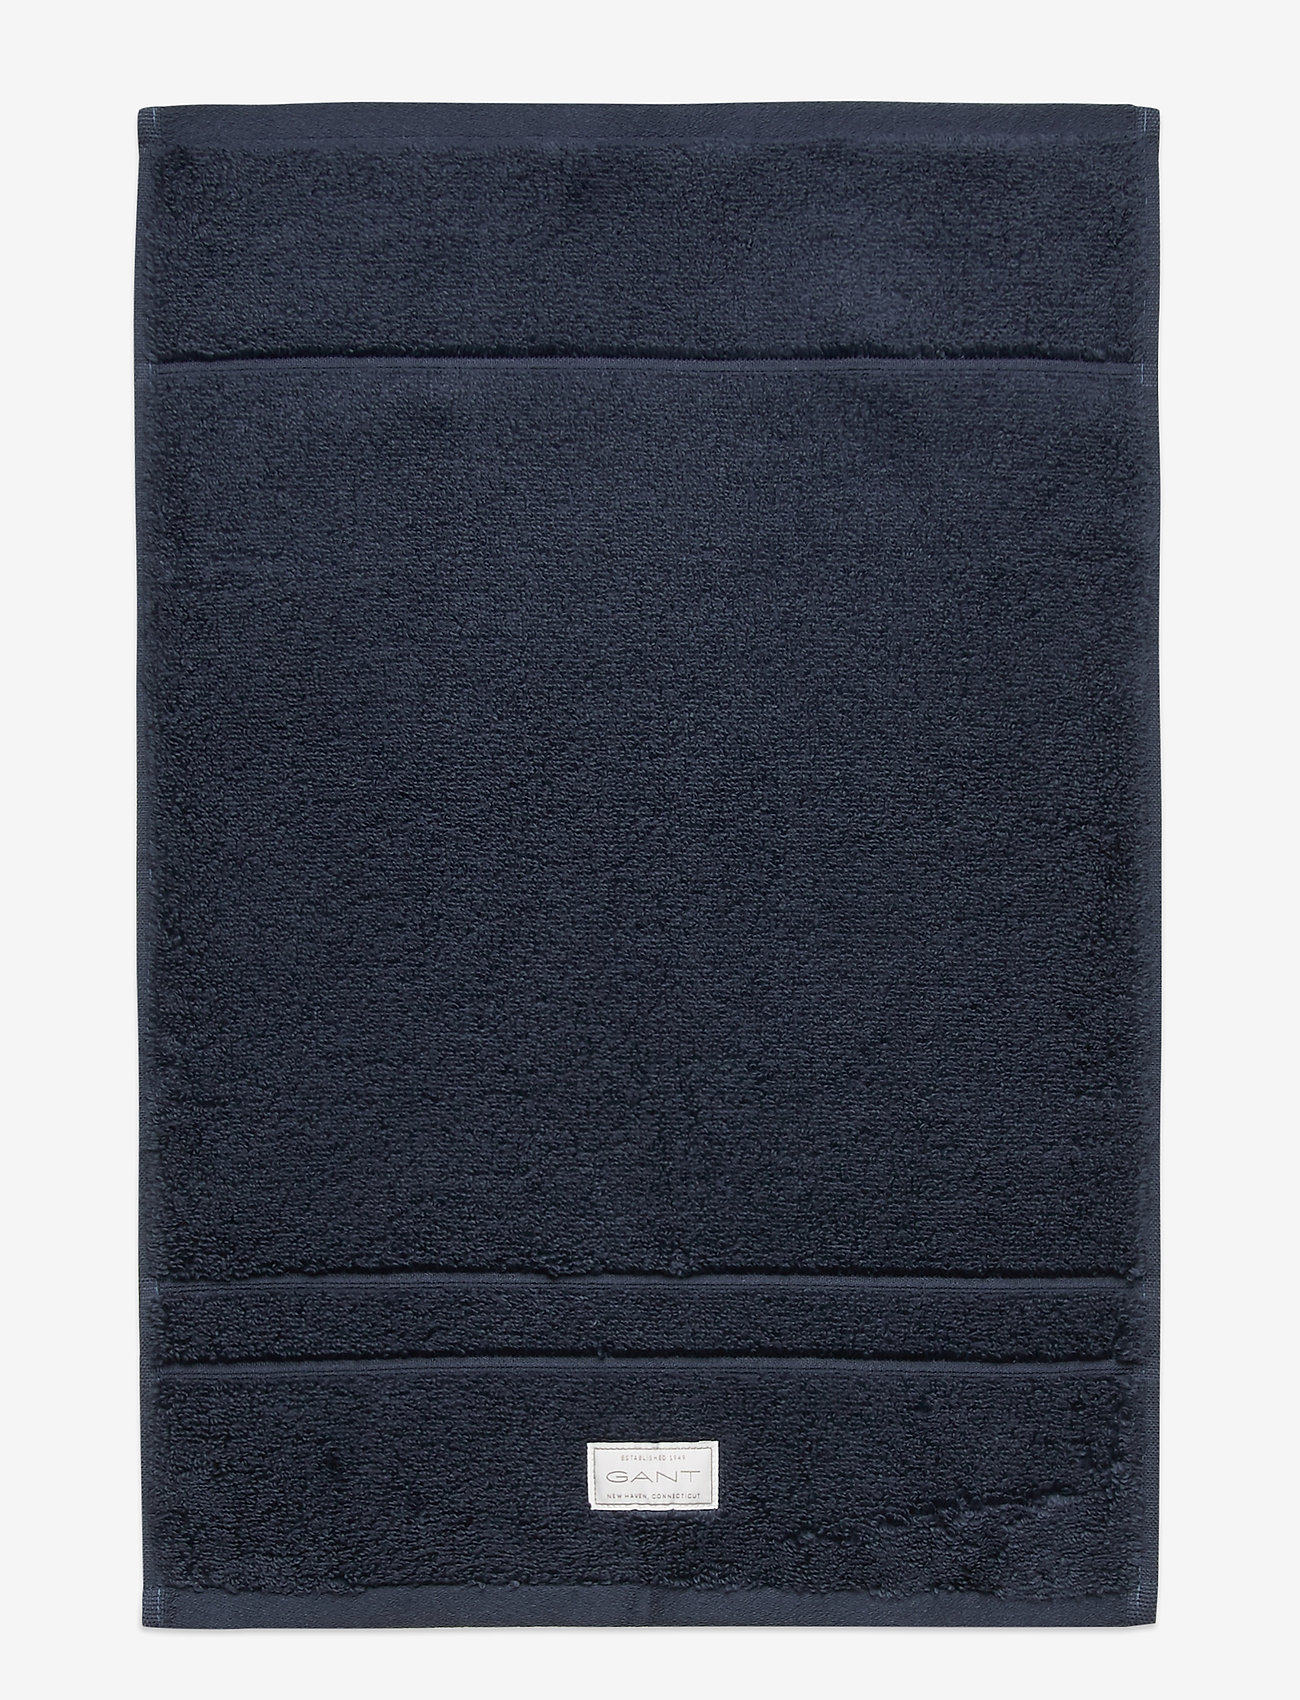 GANT - PREMIUM TOWEL 30X50 - ansiktshanddukar - sateen blue - 0